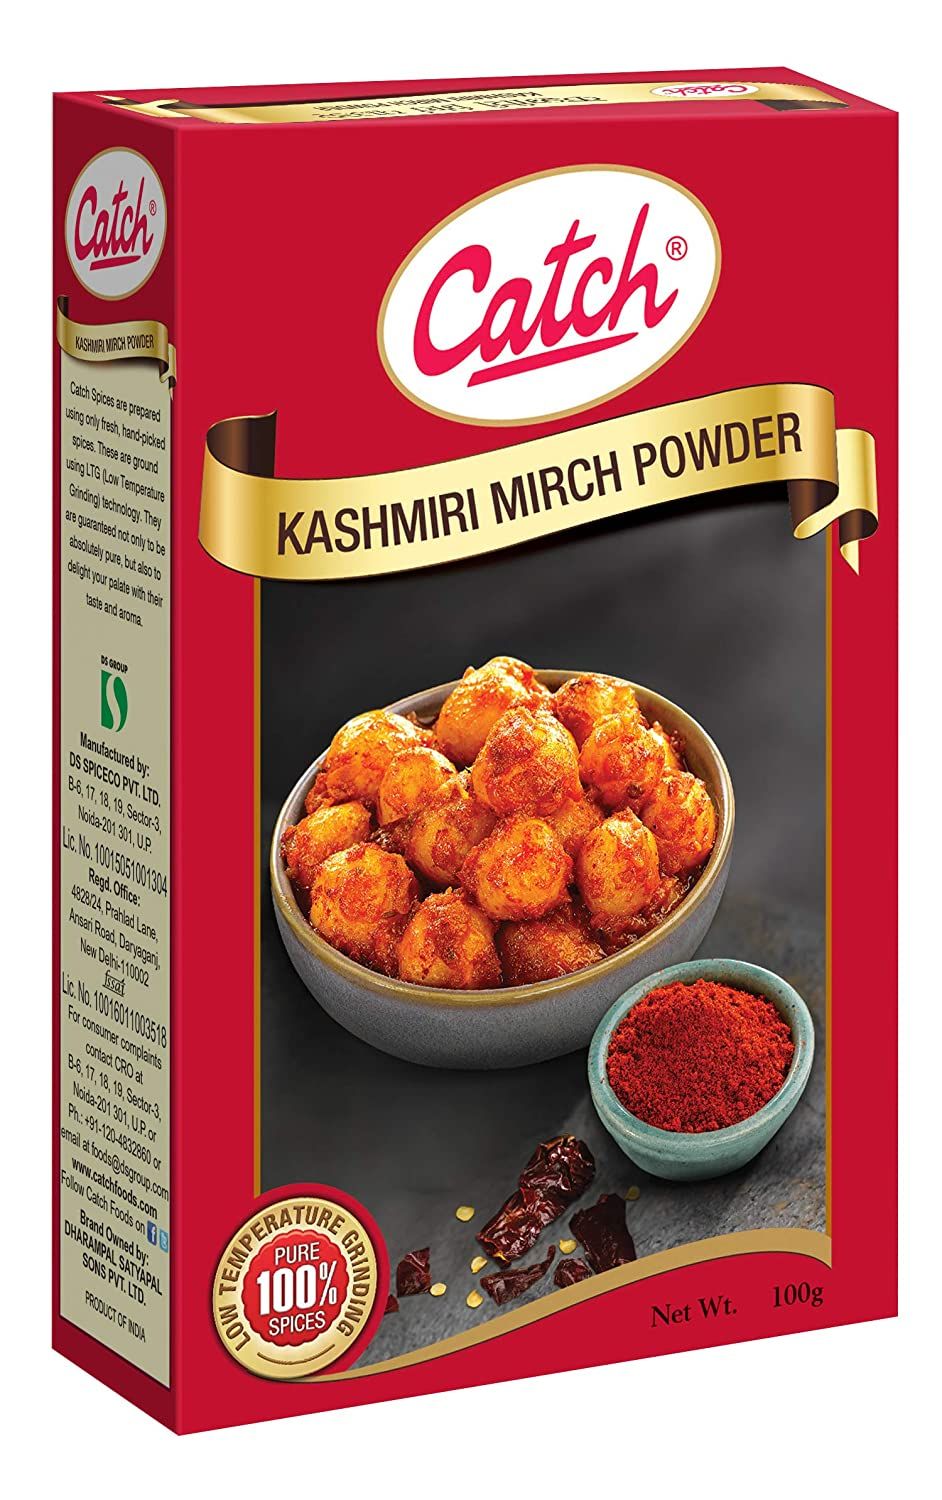 Catch Kashmiri Mirch Powder Image